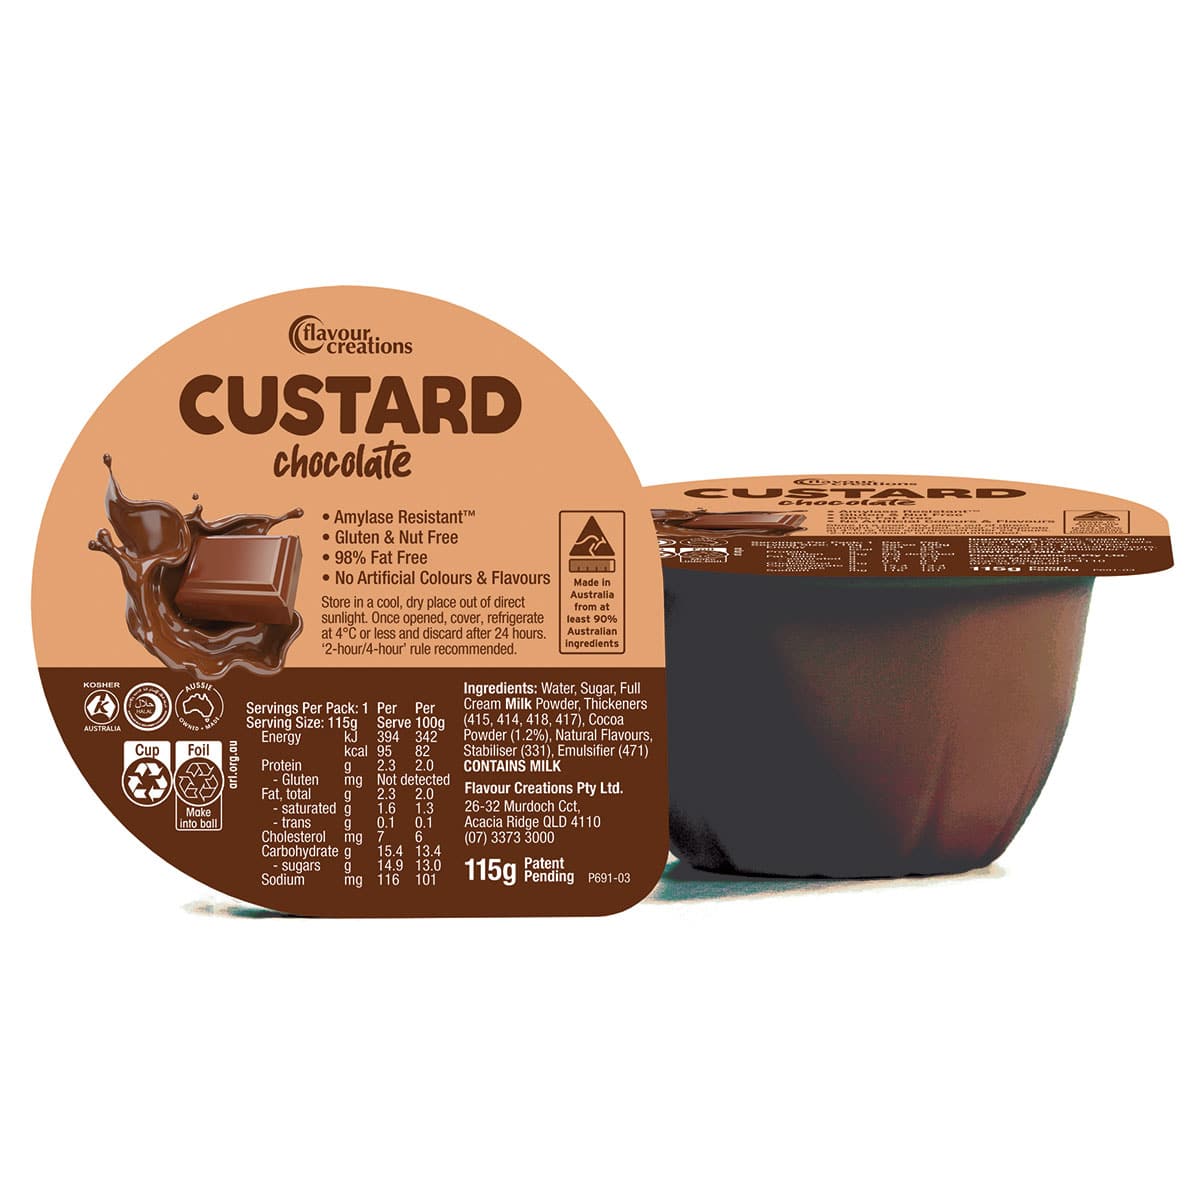 Chocolate Custard - 98% Fat Free - 95kcal, 2.3g Protein